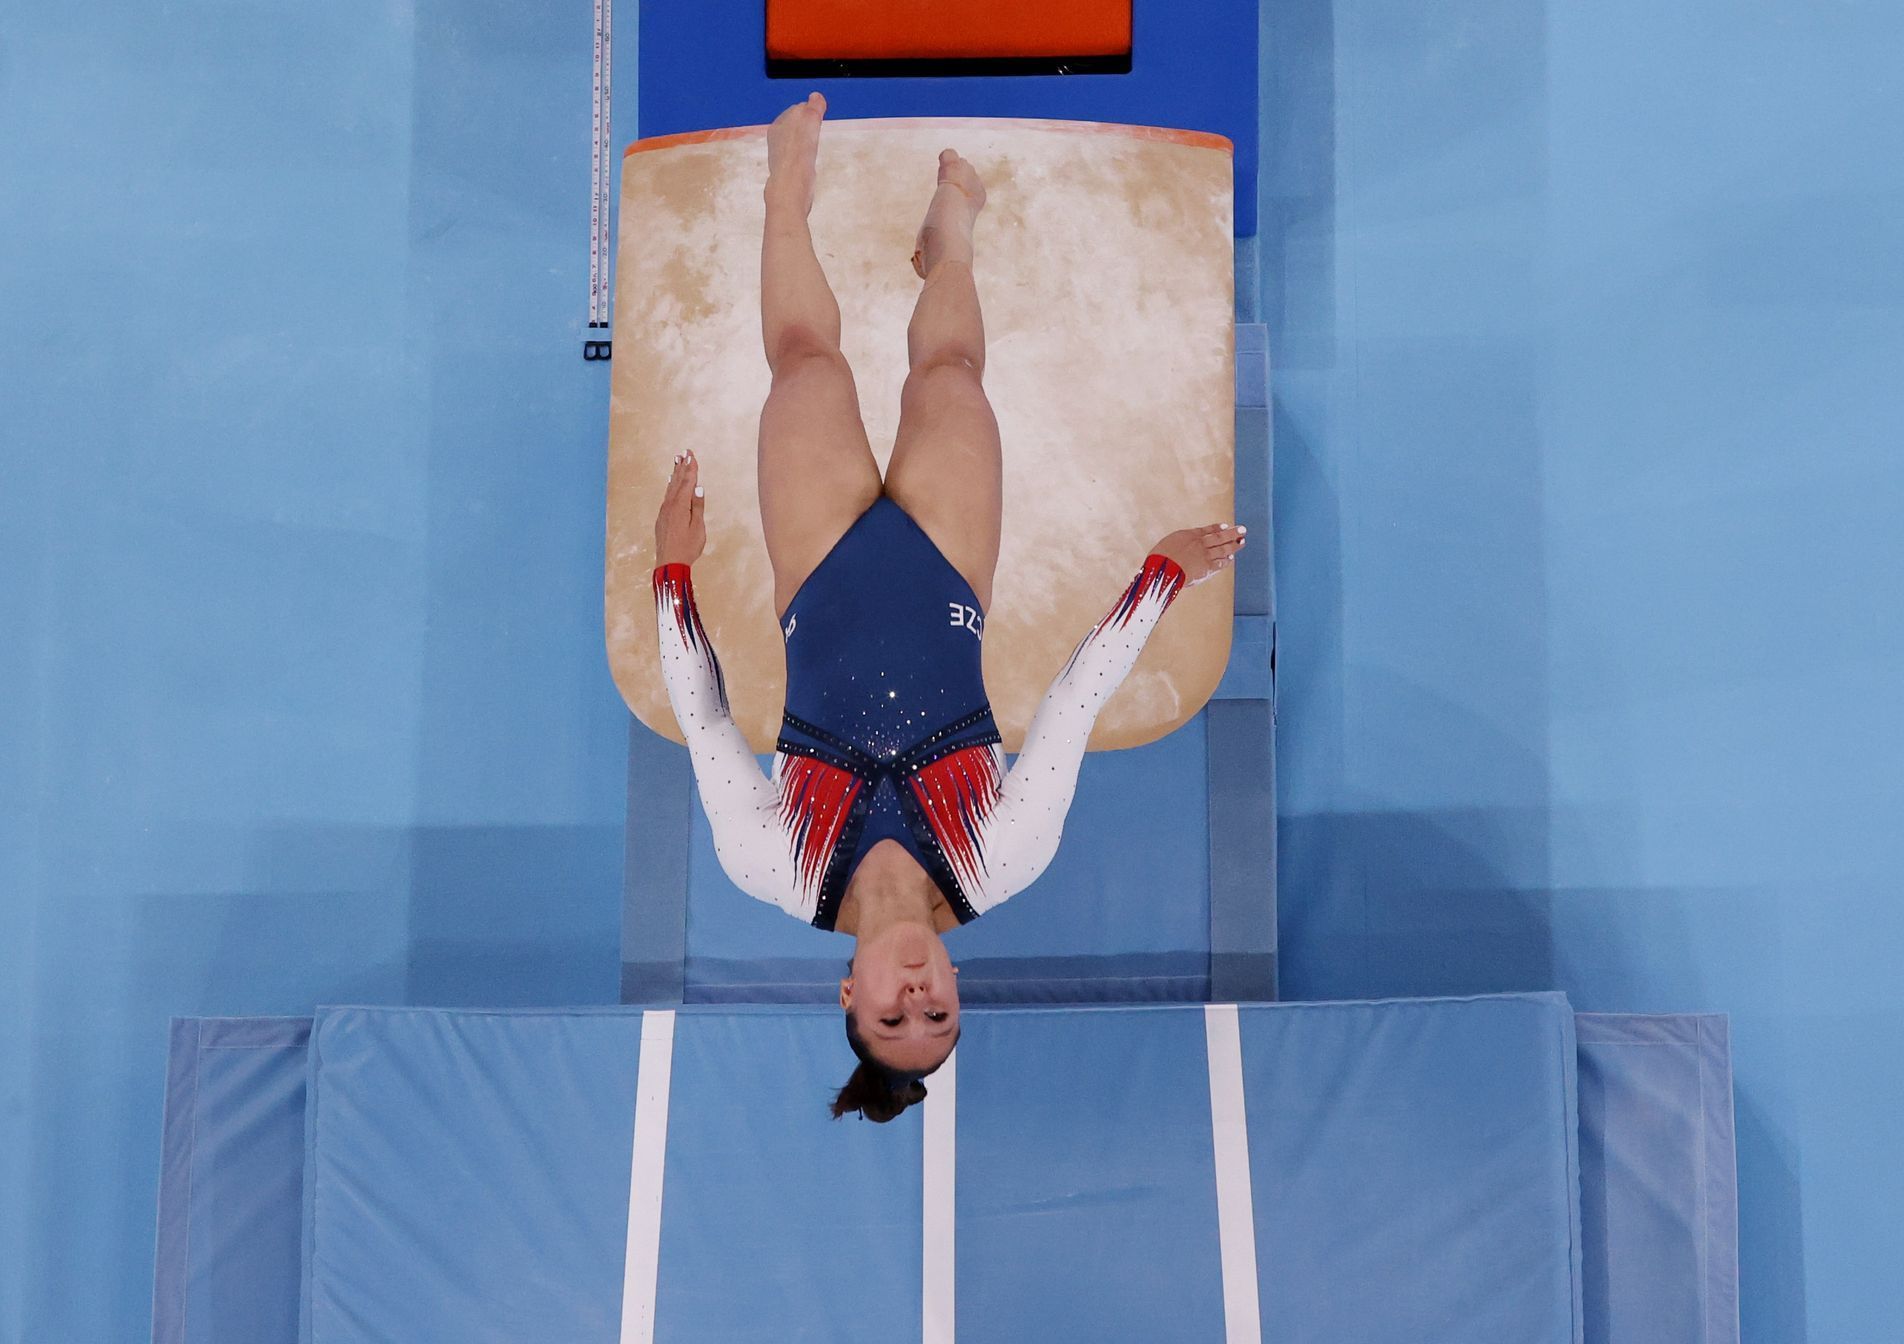 Česká sportovní gymnastka Aneta Holasová na OH 2020